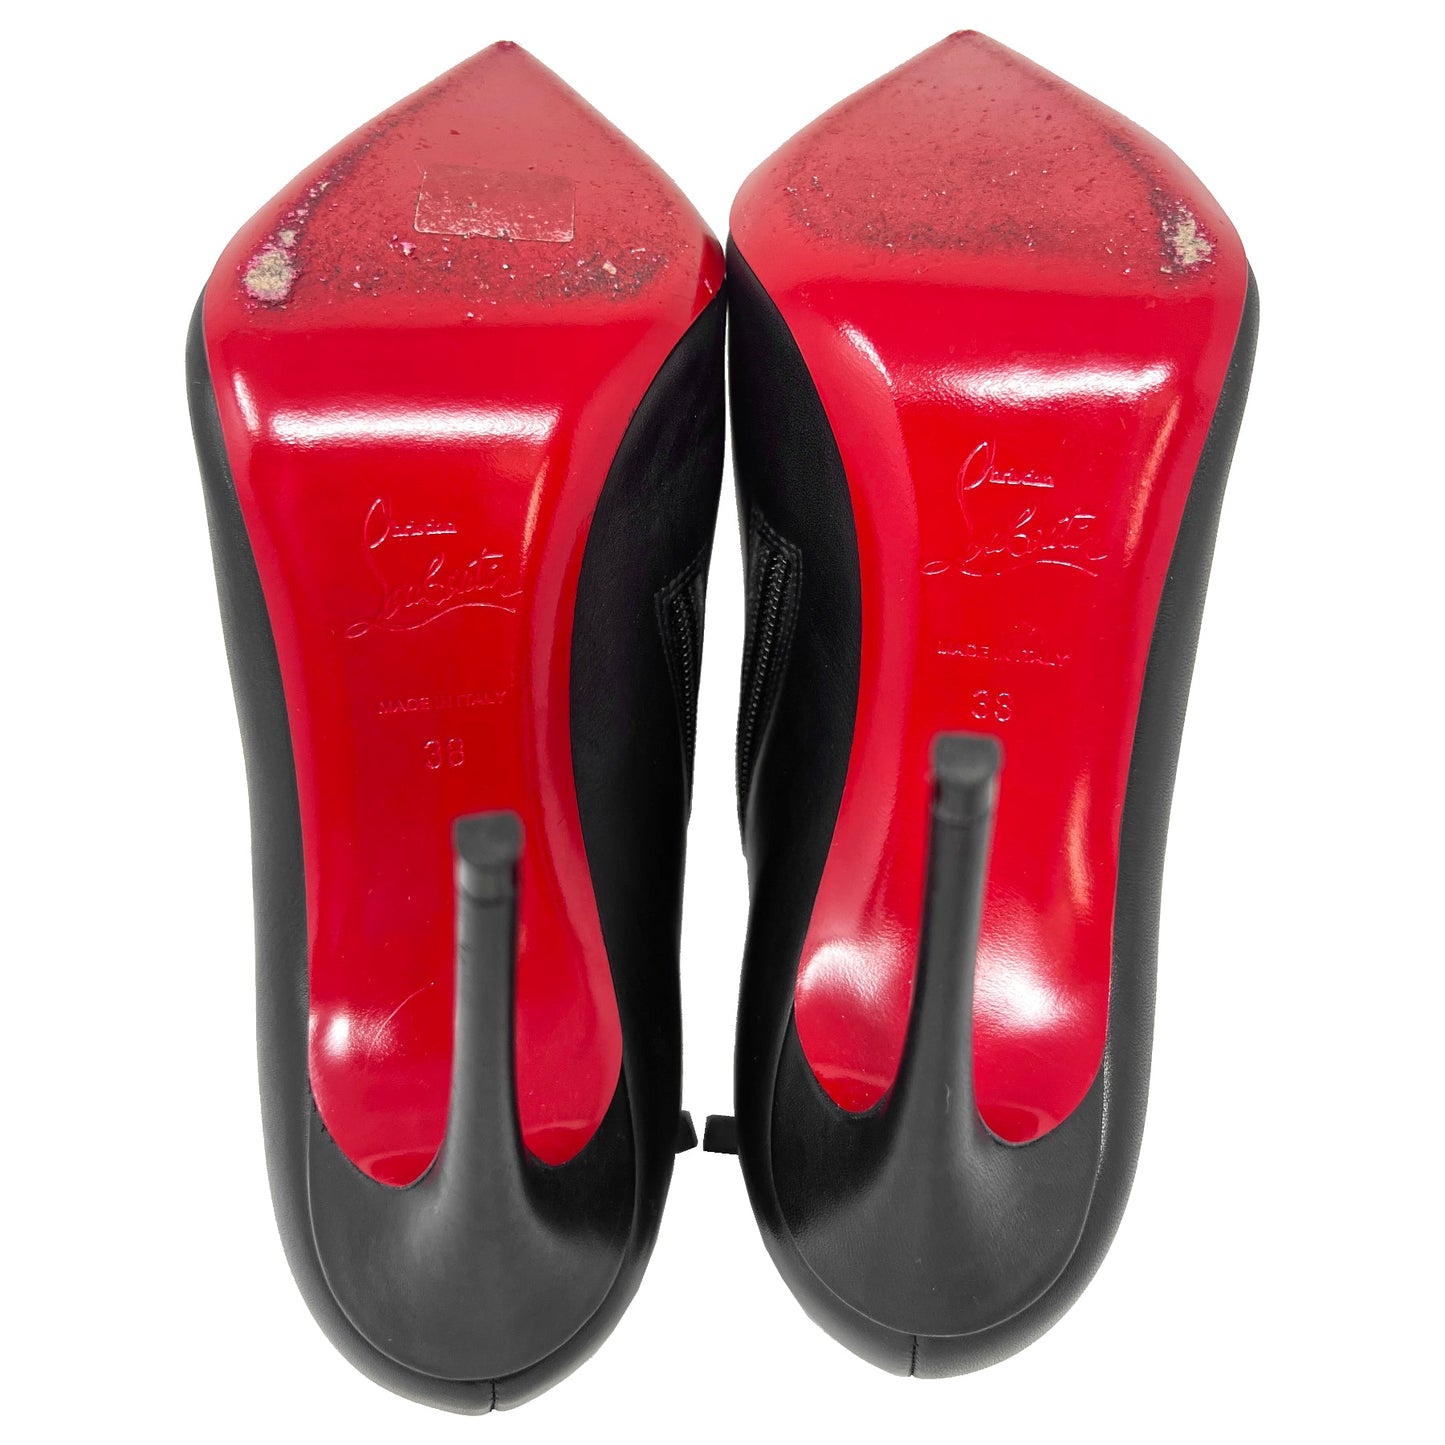 Christian Louboutin So Kate 100 Black Leather Ankle Boots Size EU 38